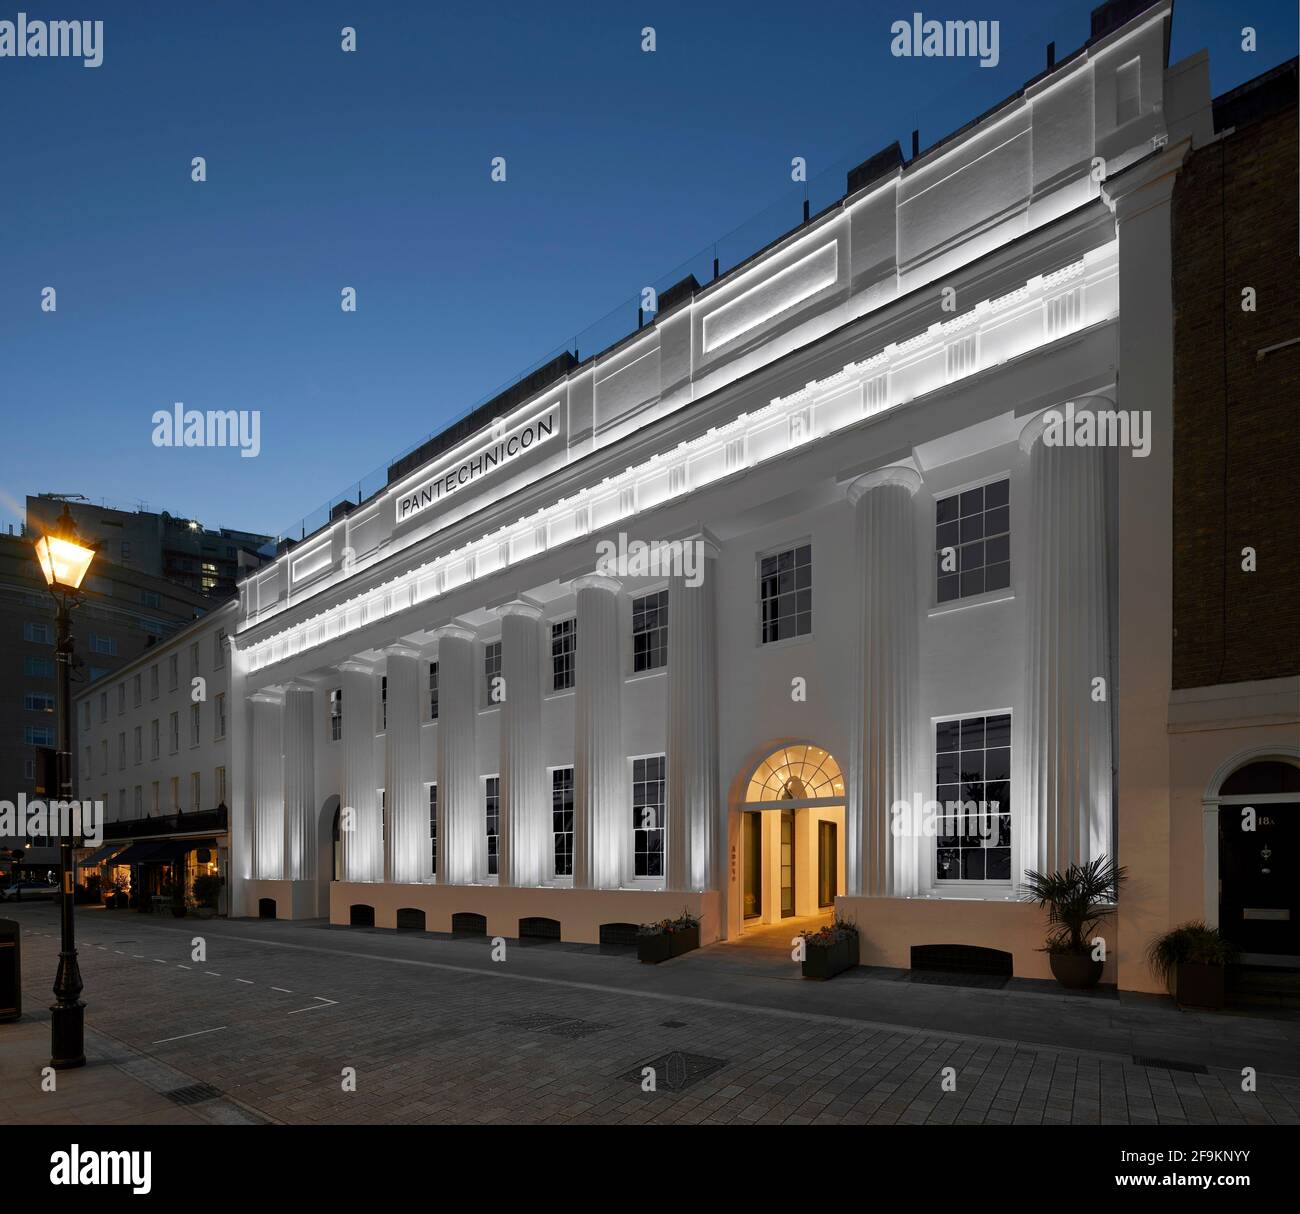 Exterior at dusk. Pantechnicon, London, United Kingdom. Architect: Farrells, 2020. Stock Photo